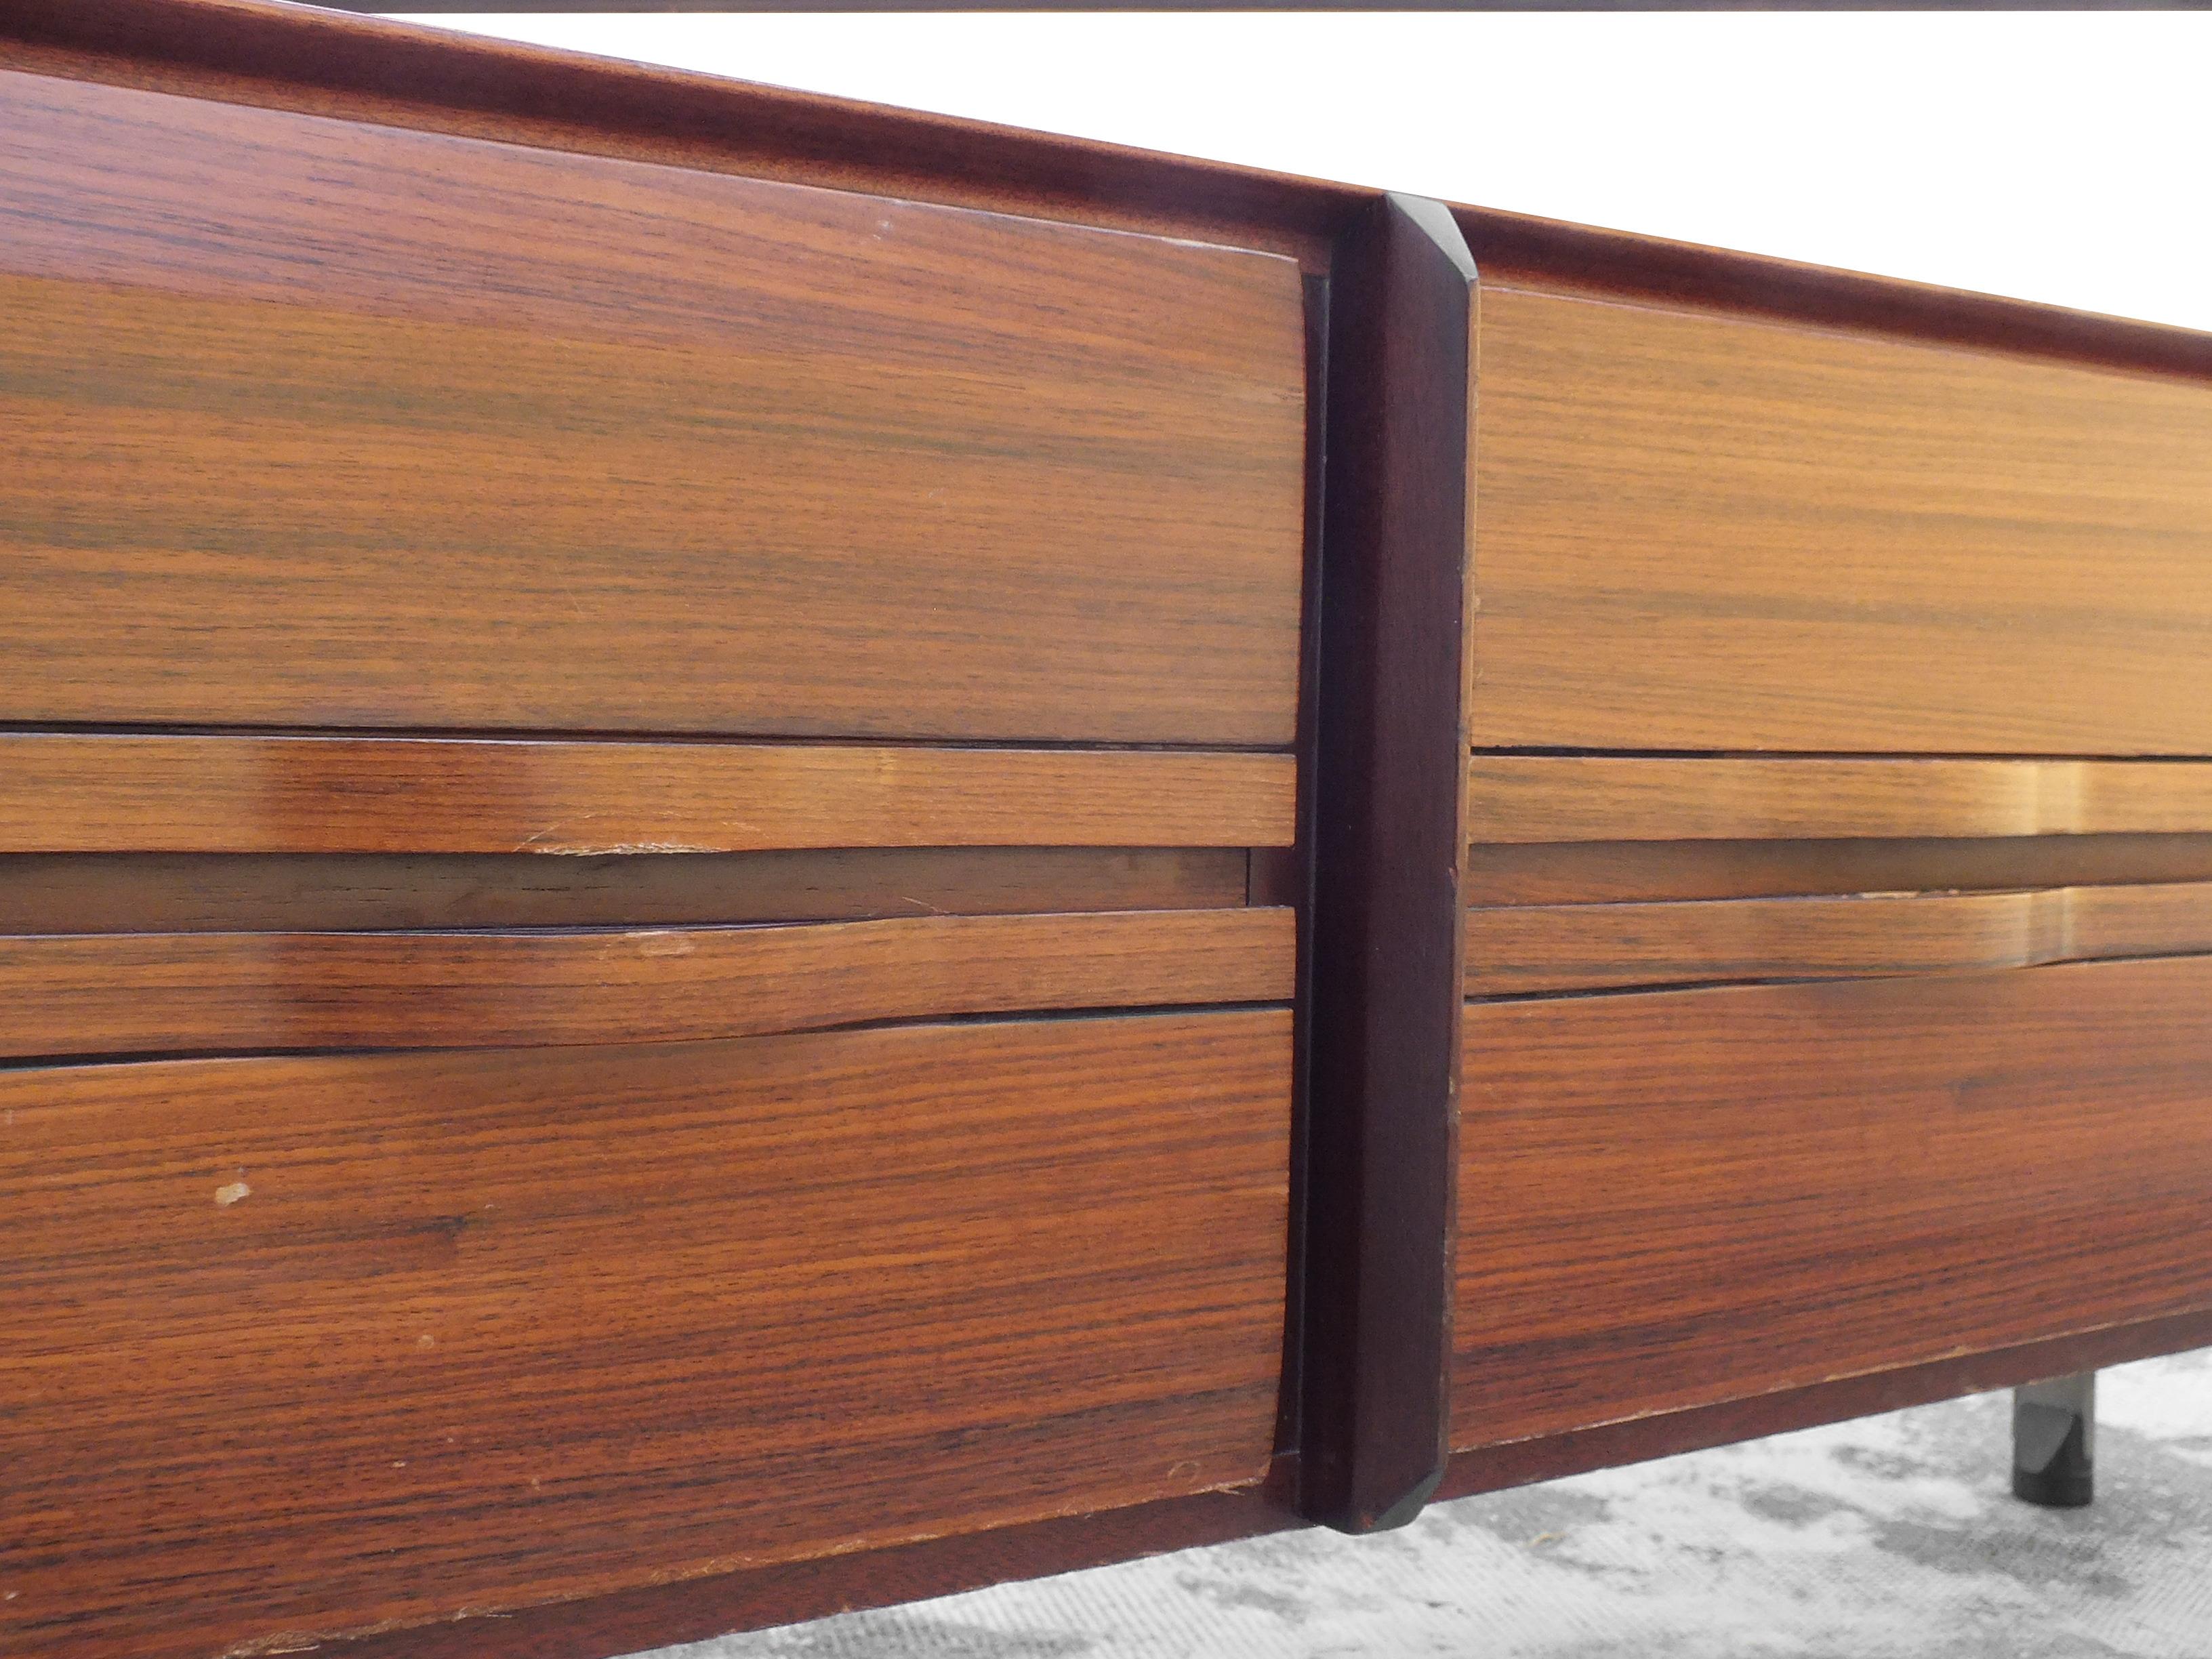 Minimalist La Permanente meuble Cantu' Italy minimalist sideboard probable Frattini design  For Sale